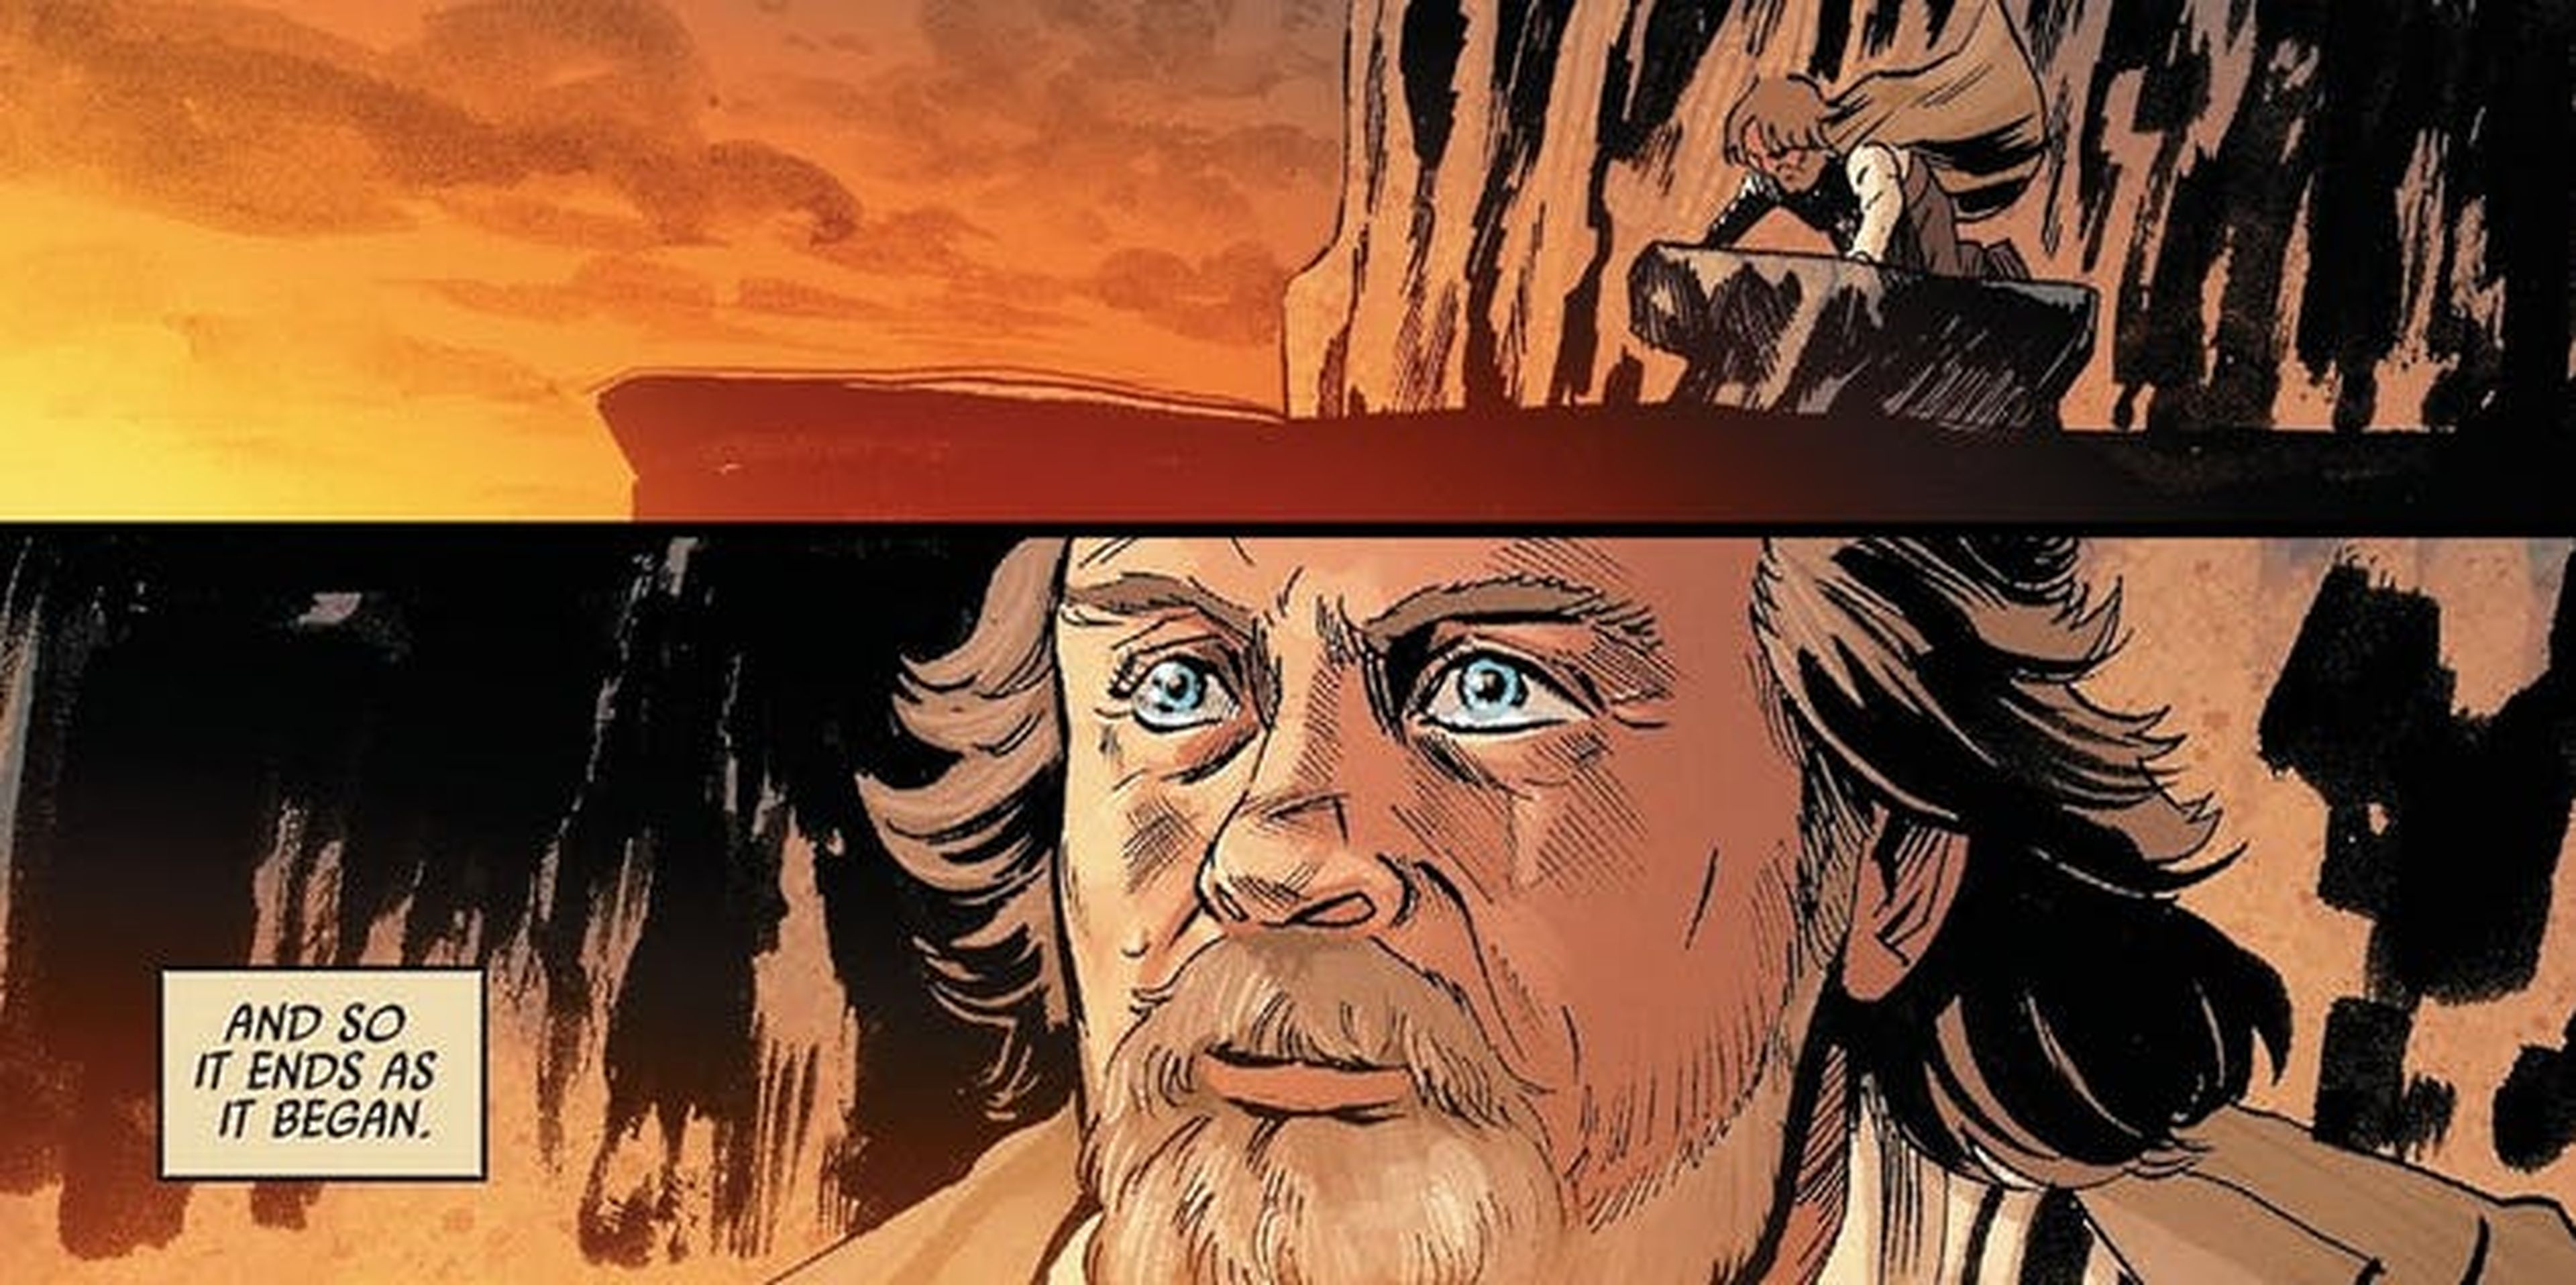 Star Wars Los últimos Jedi - Muerte de Luke